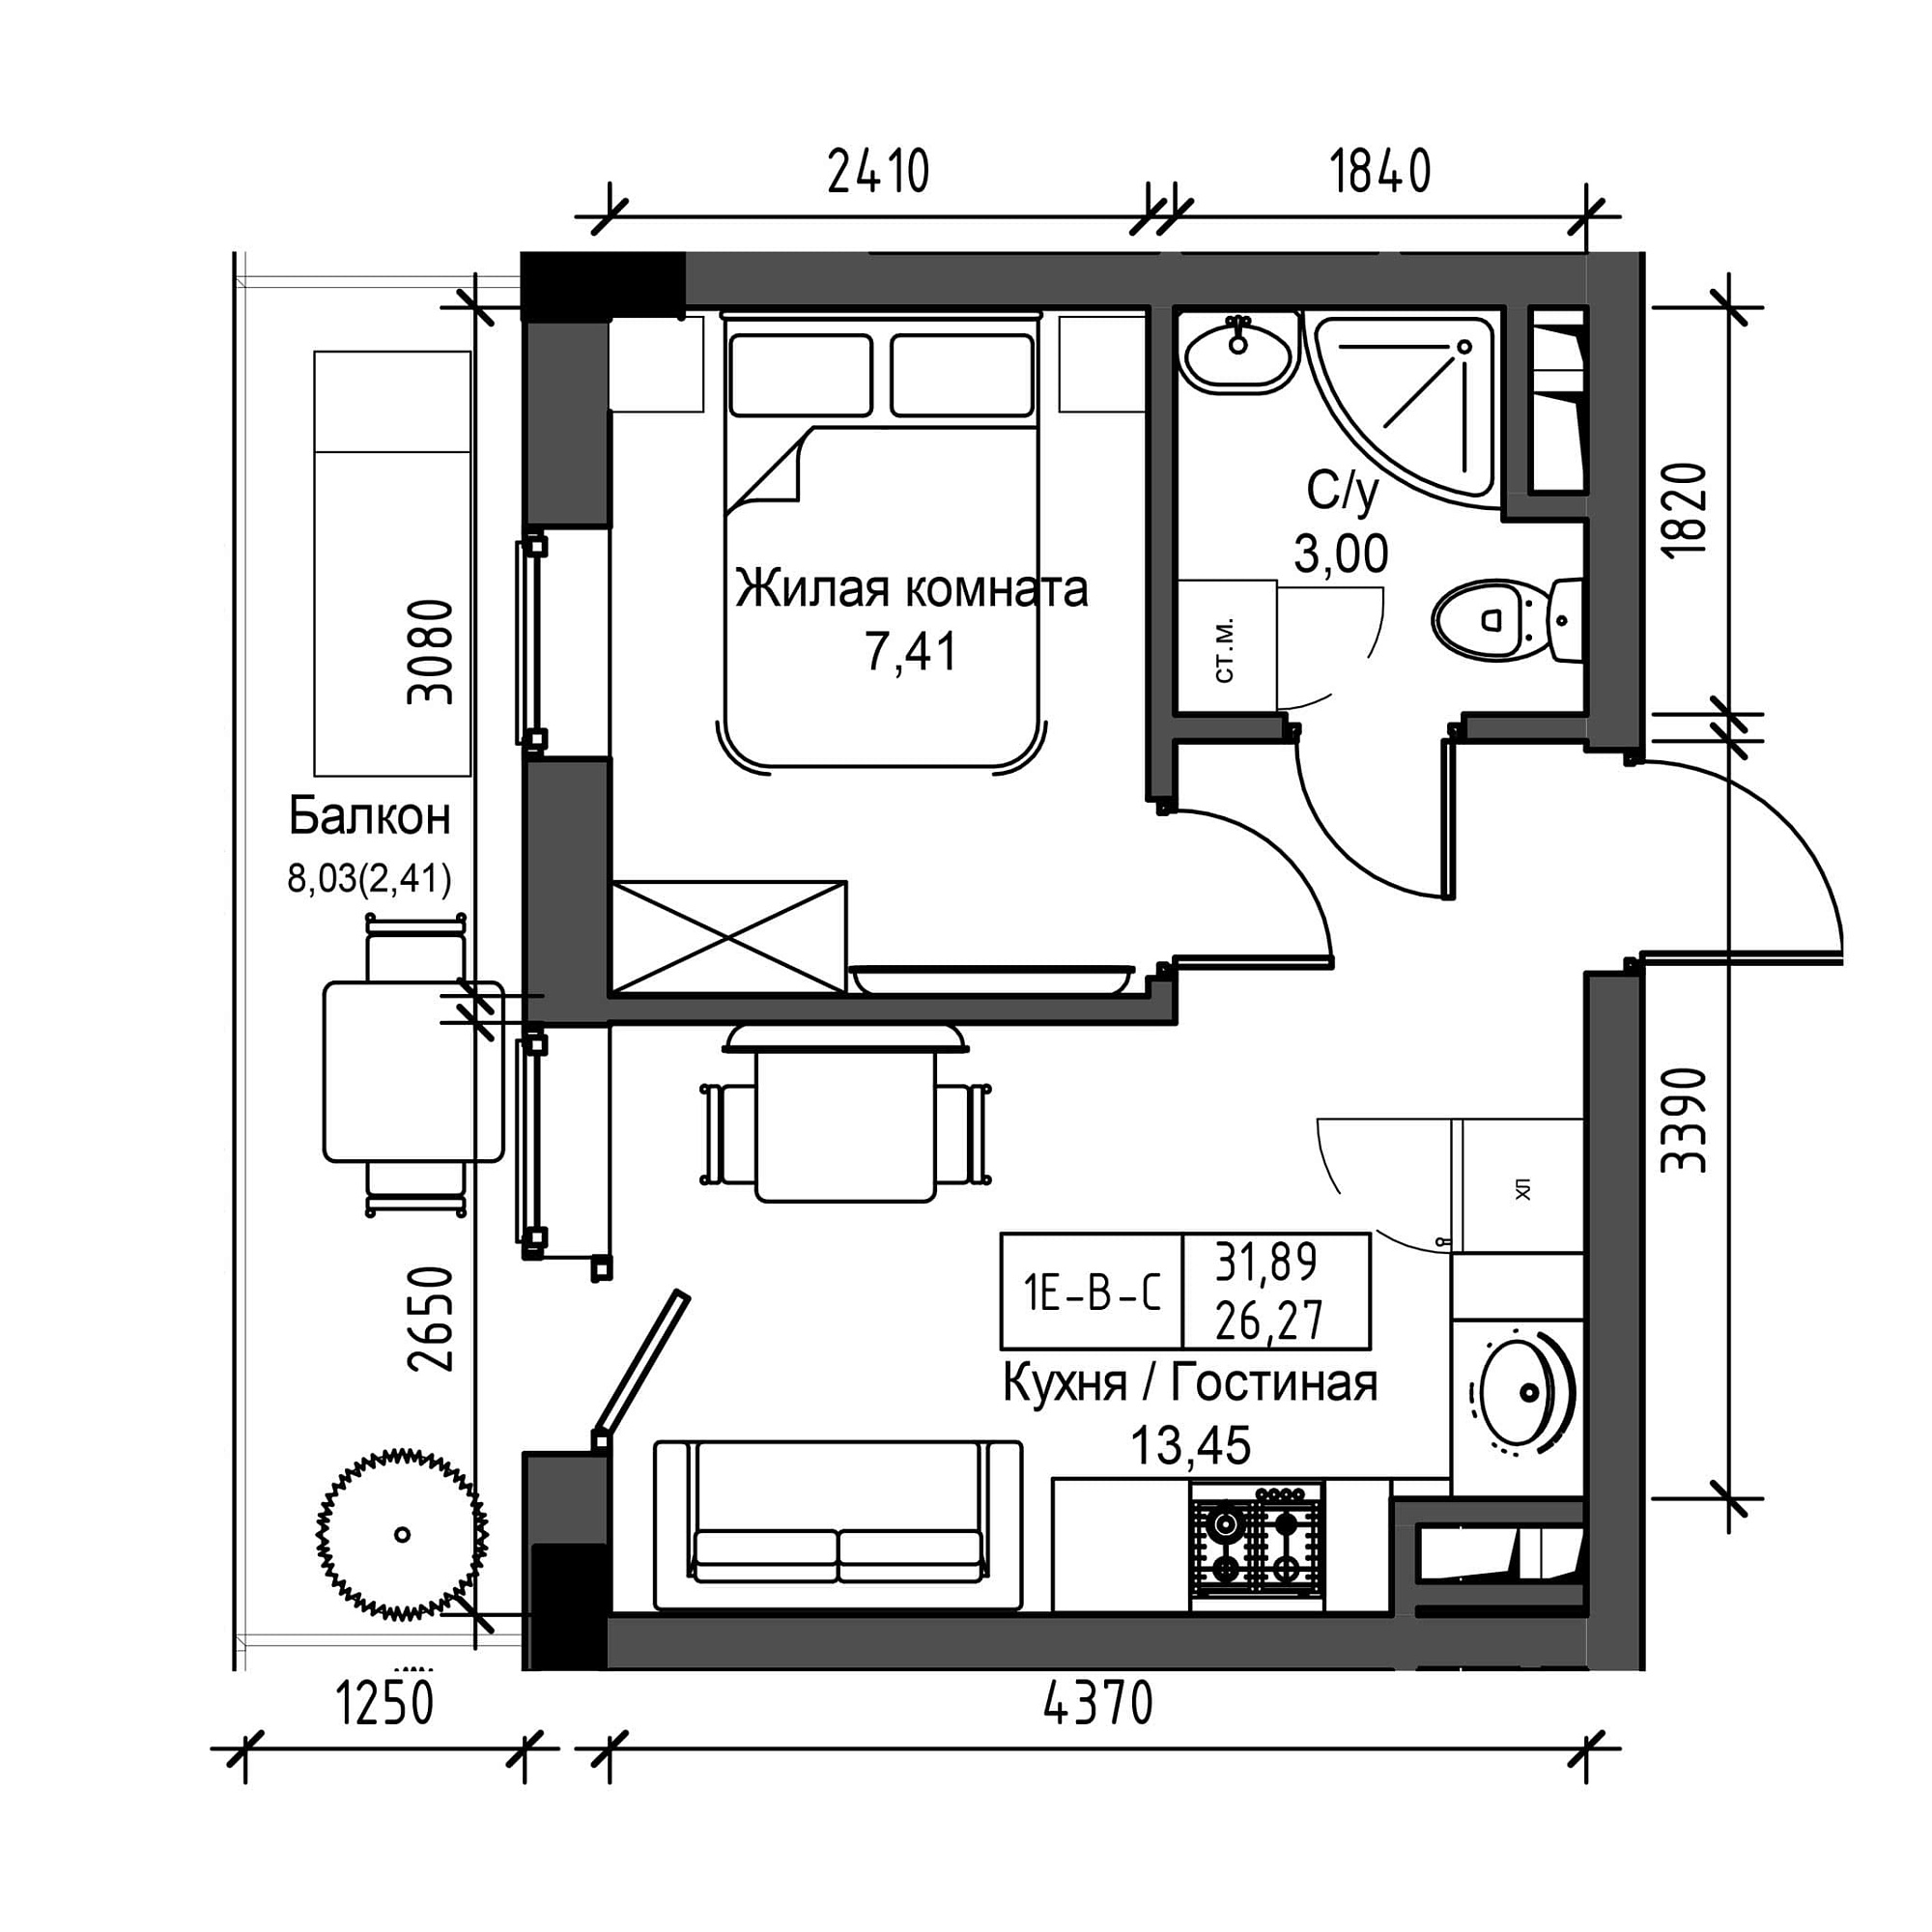 Планування 1-к квартира площею 26.27м2, UM-001-08/0015.